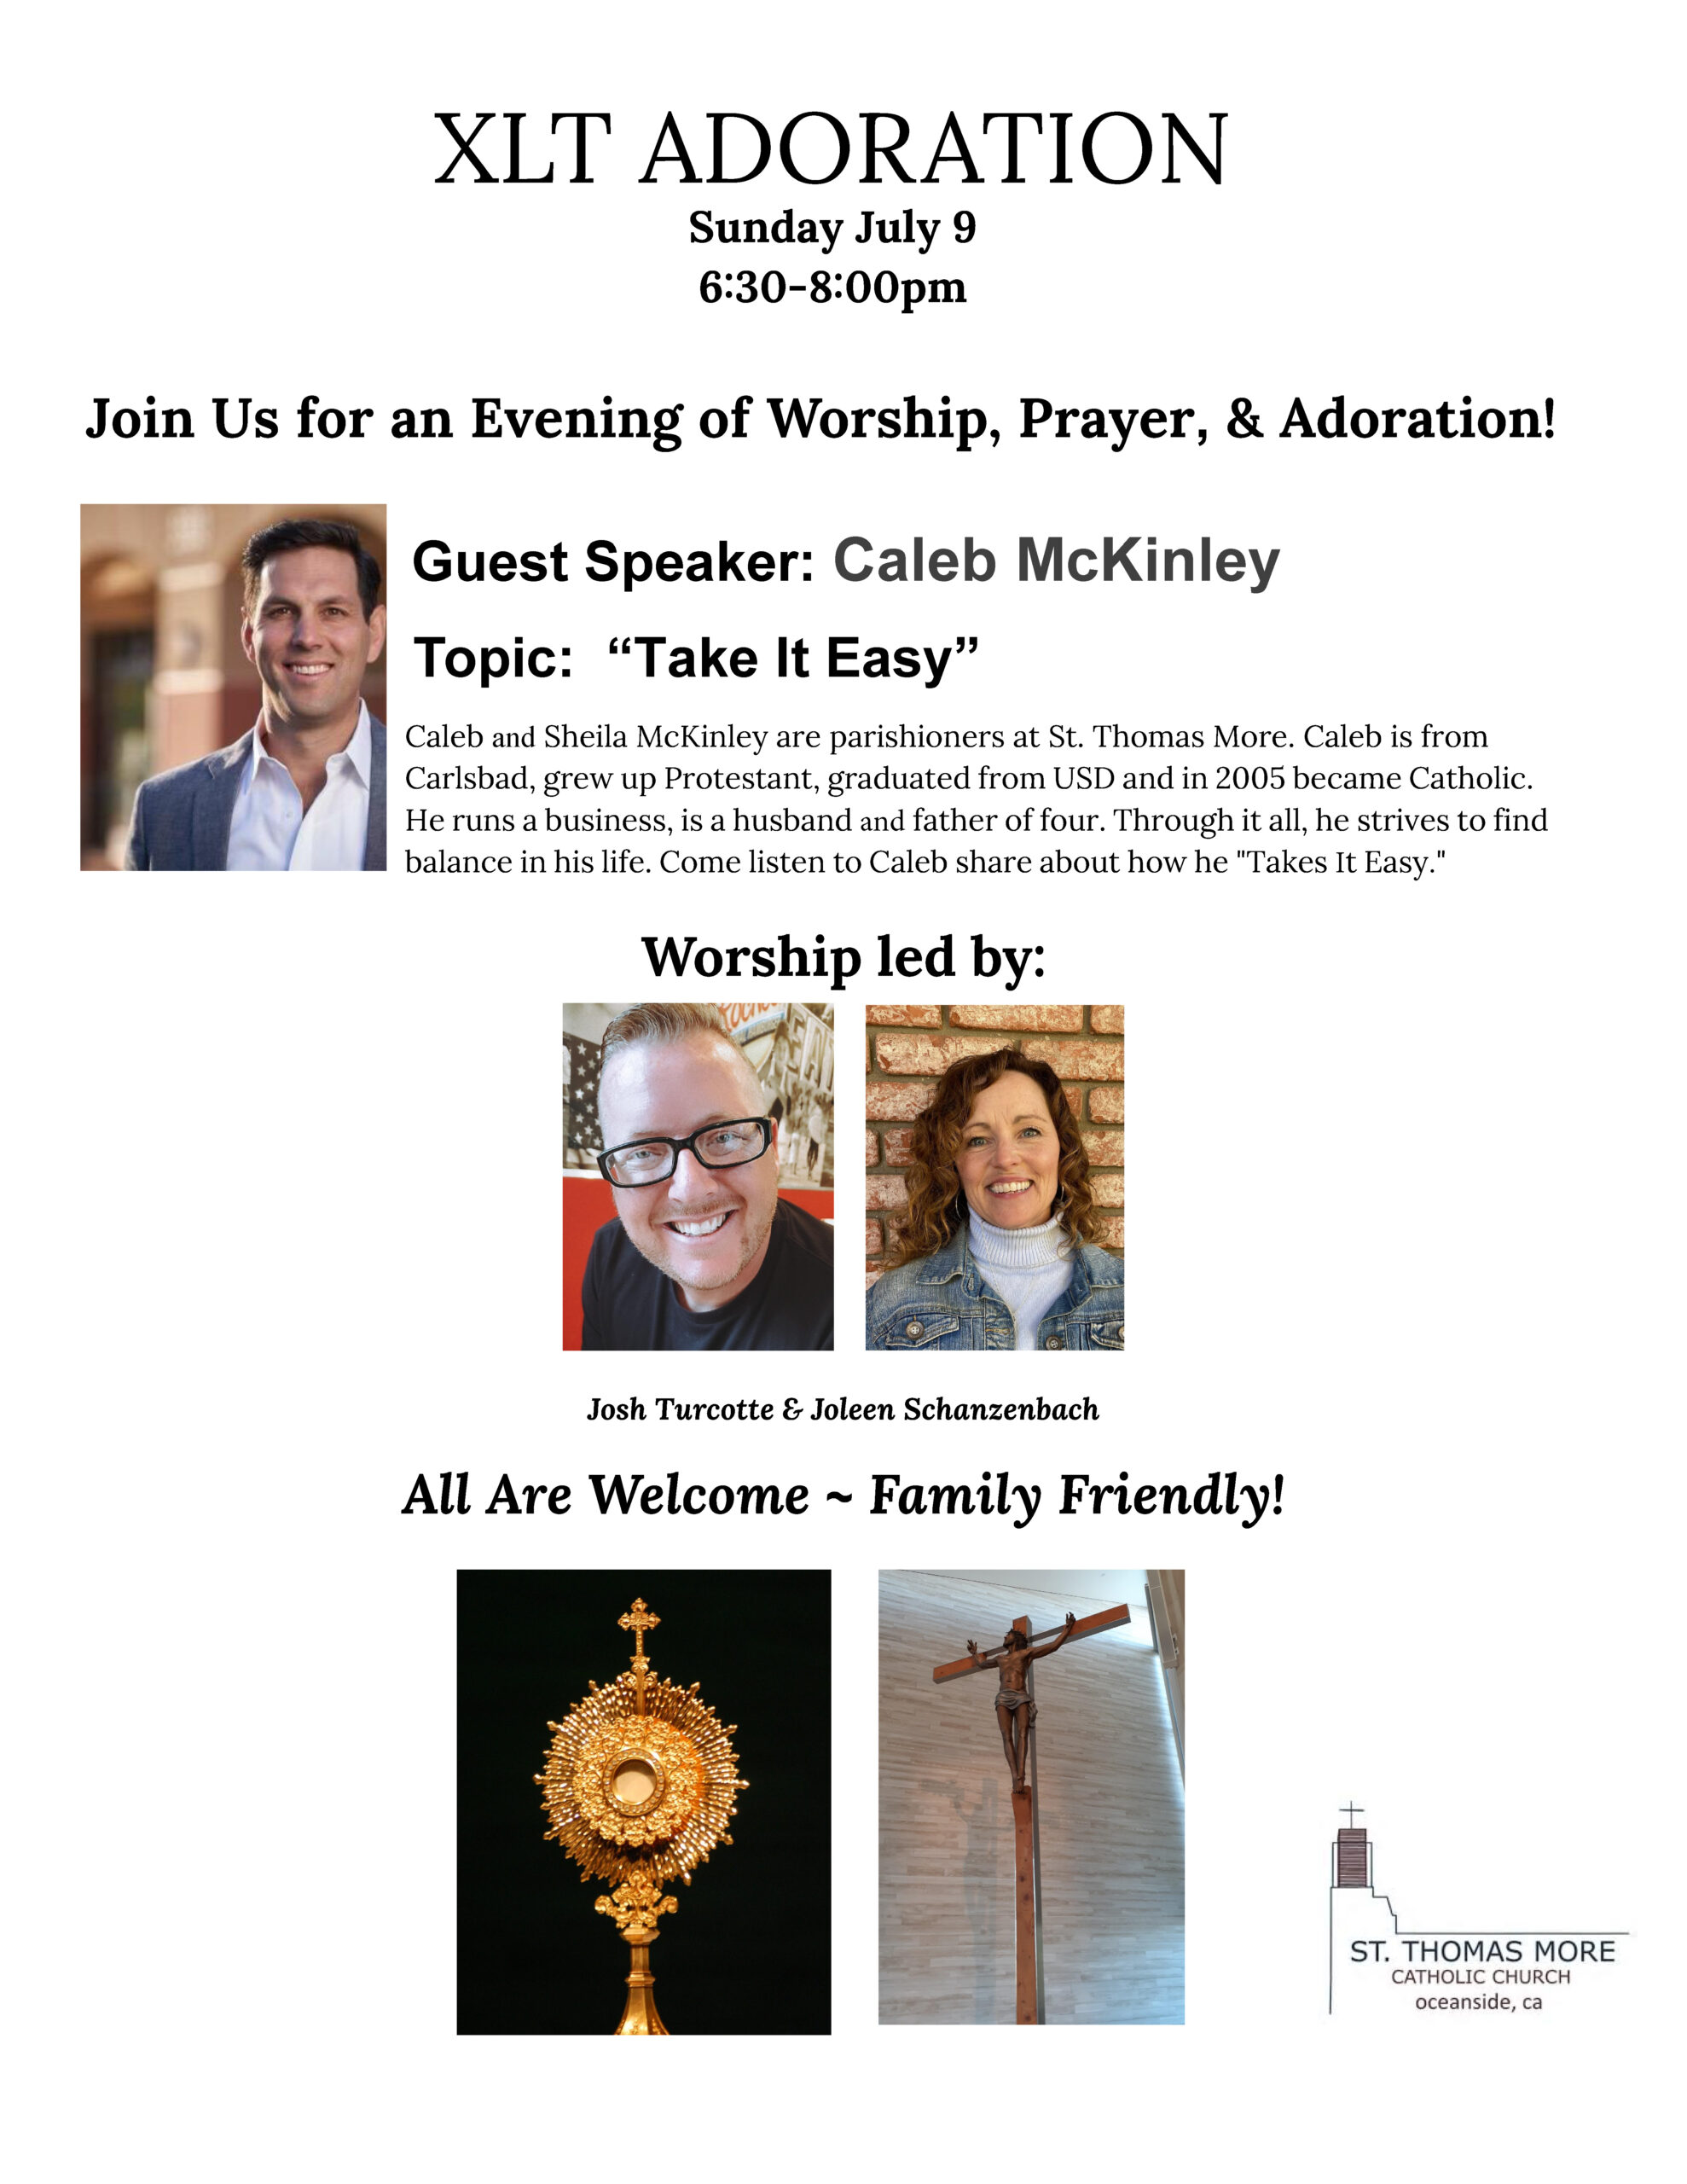 XLT Evening of Worship, Prayer, and Adoration, Sunday, July 9, 6:30pm